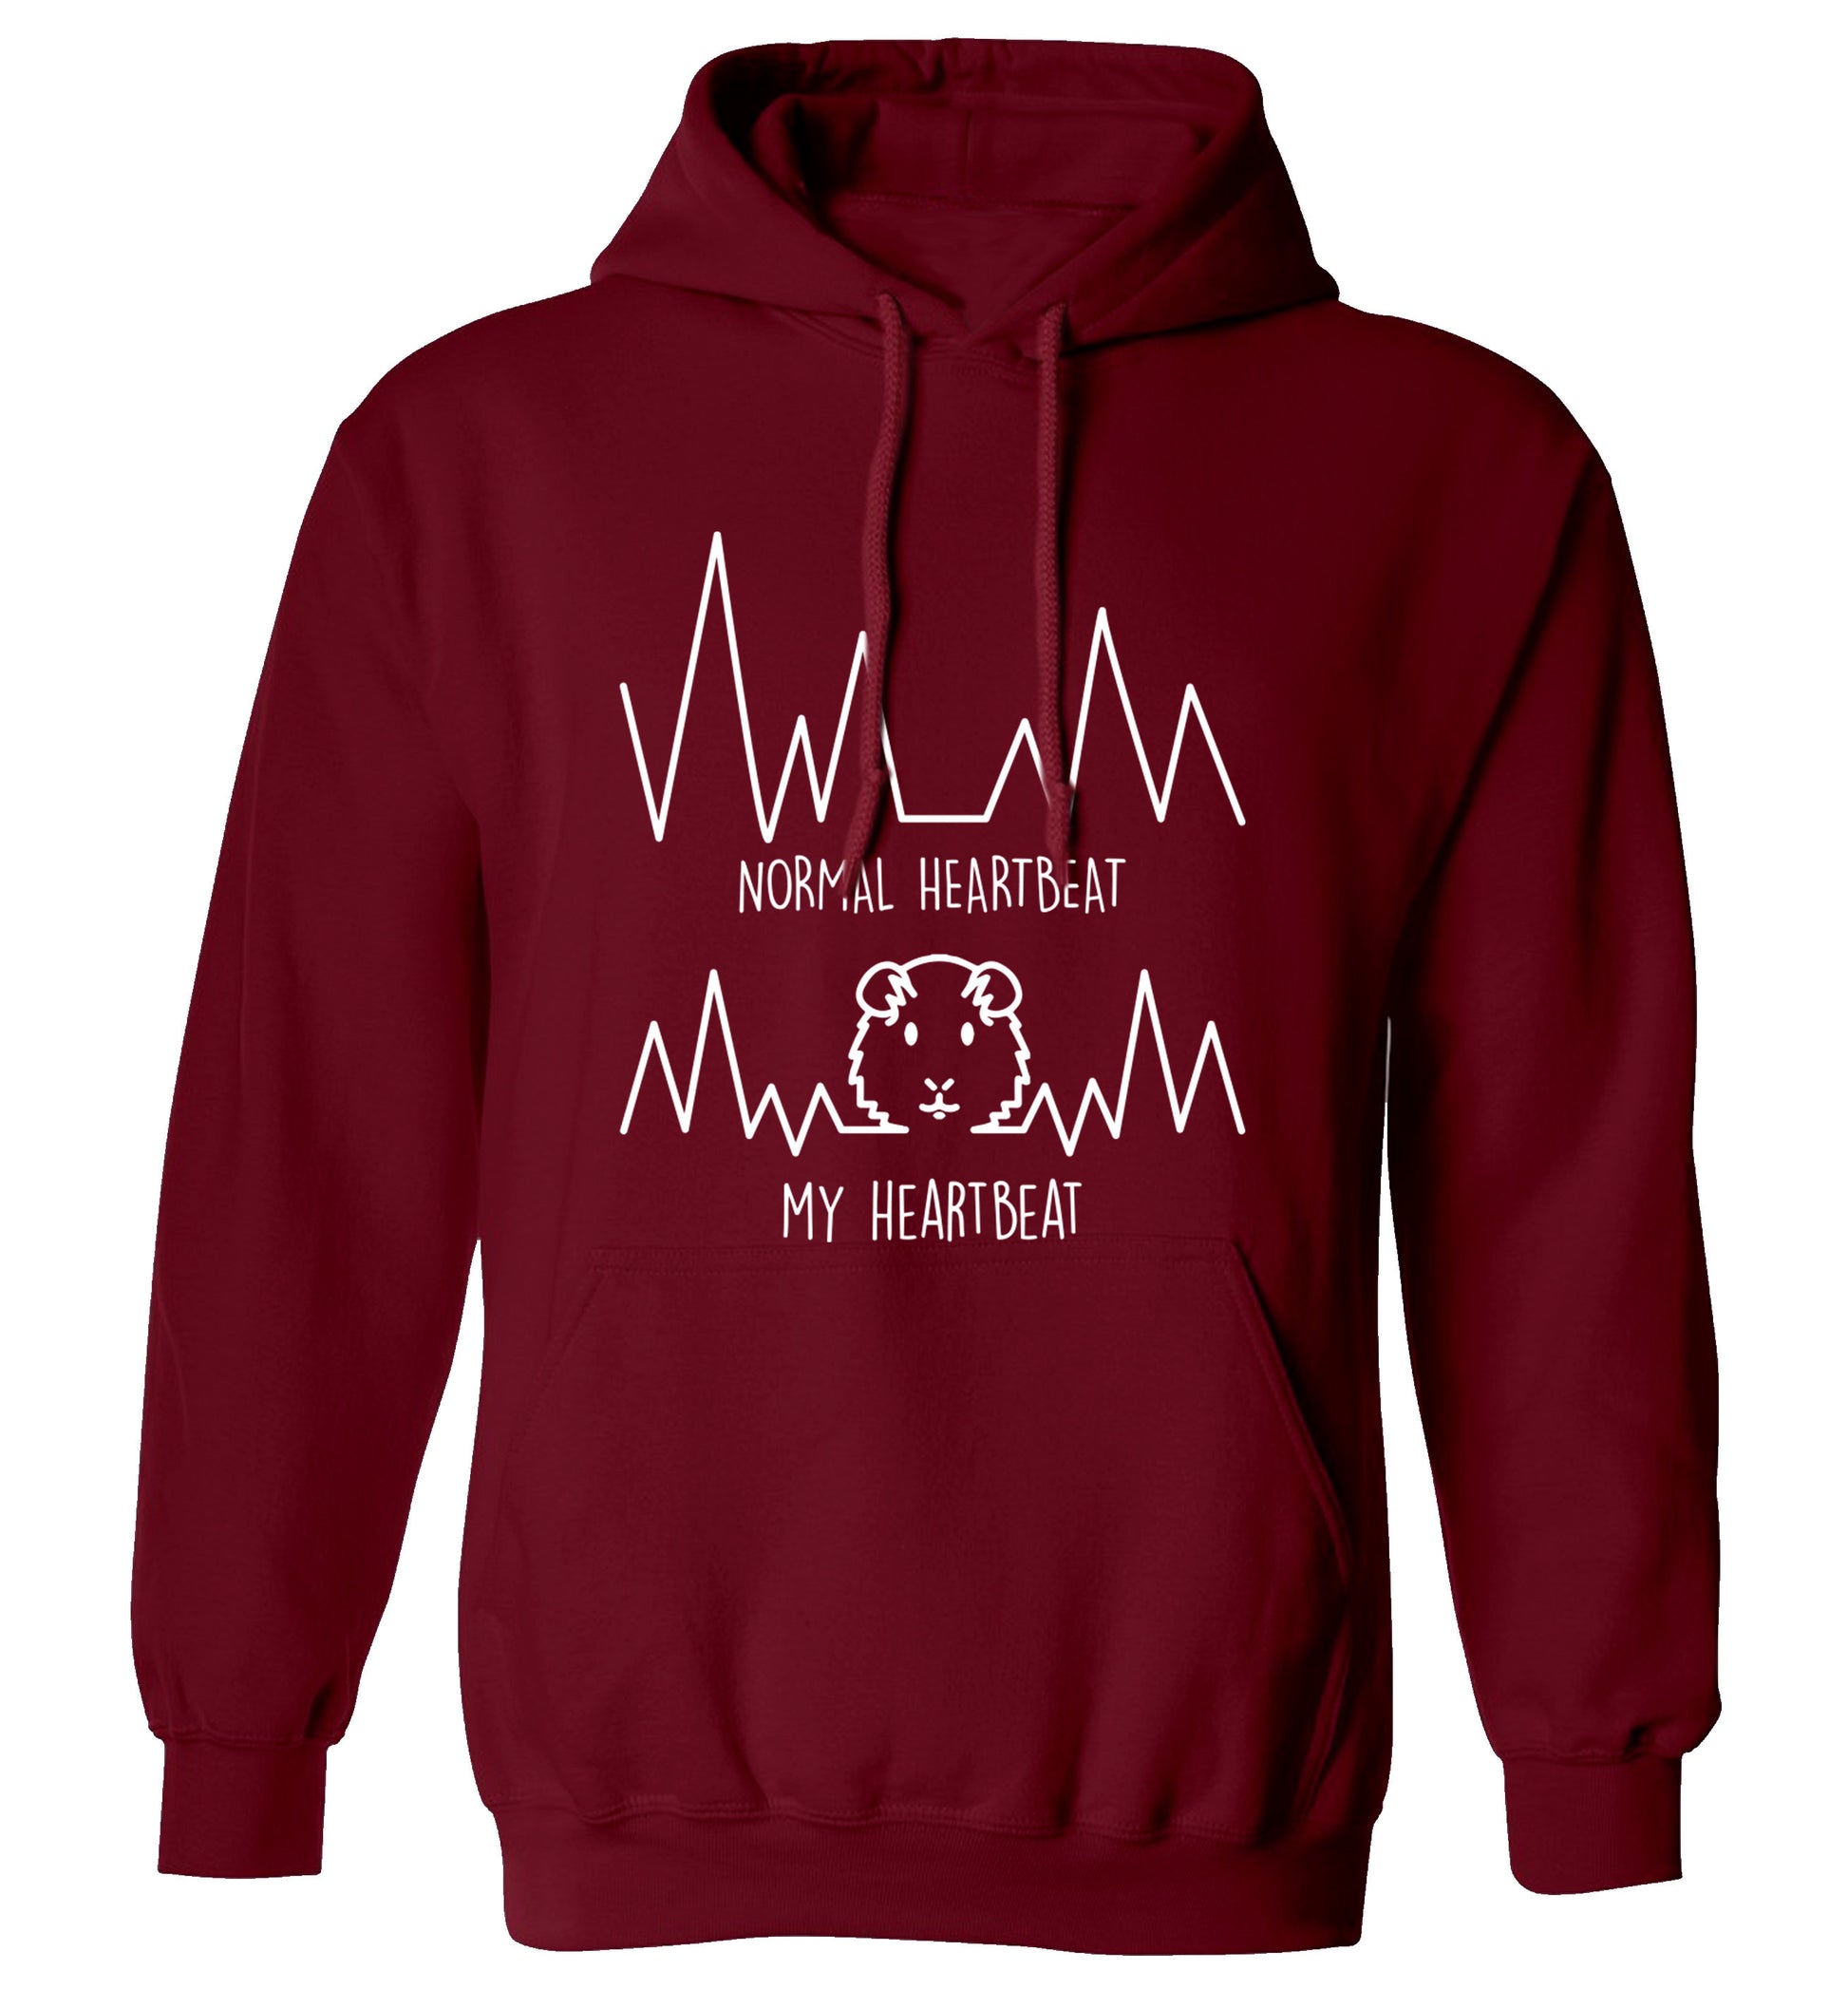 Normal heartbeat vs my heartbeat guinea pig lover adults unisex maroon hoodie 2XL